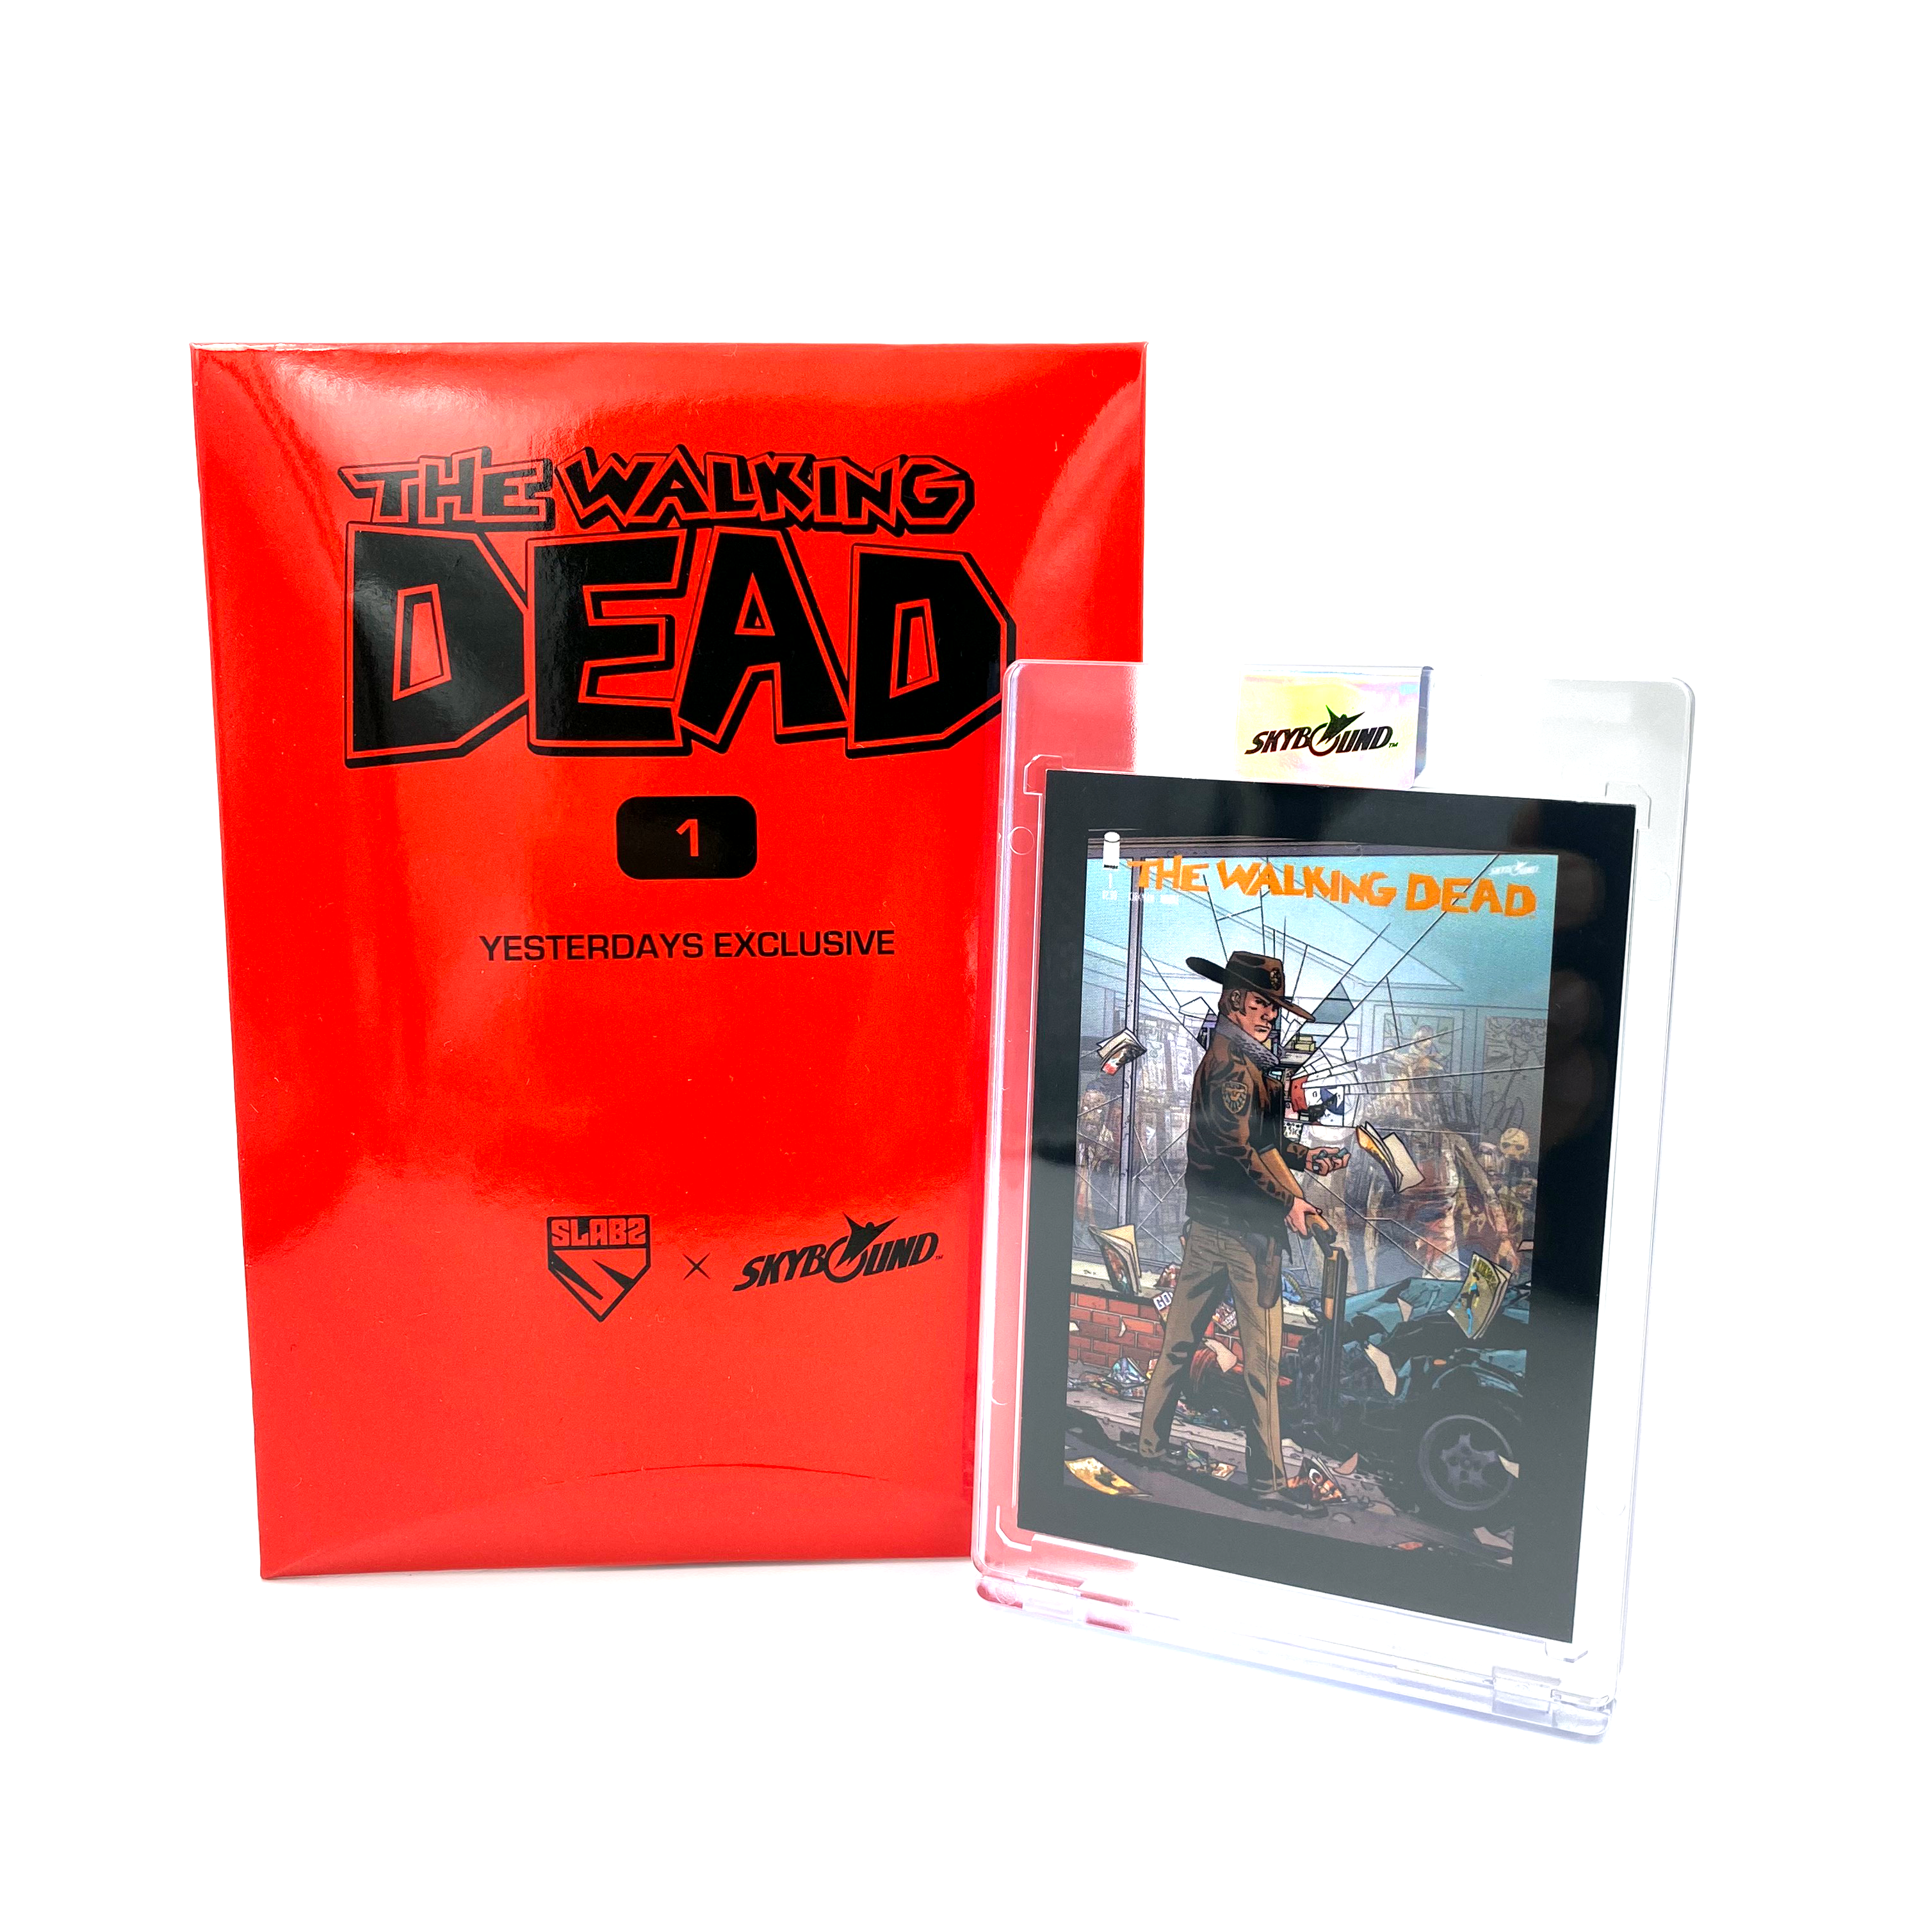 Xbox 360 Charlie Adlard The Walking Dead Display advertising, the